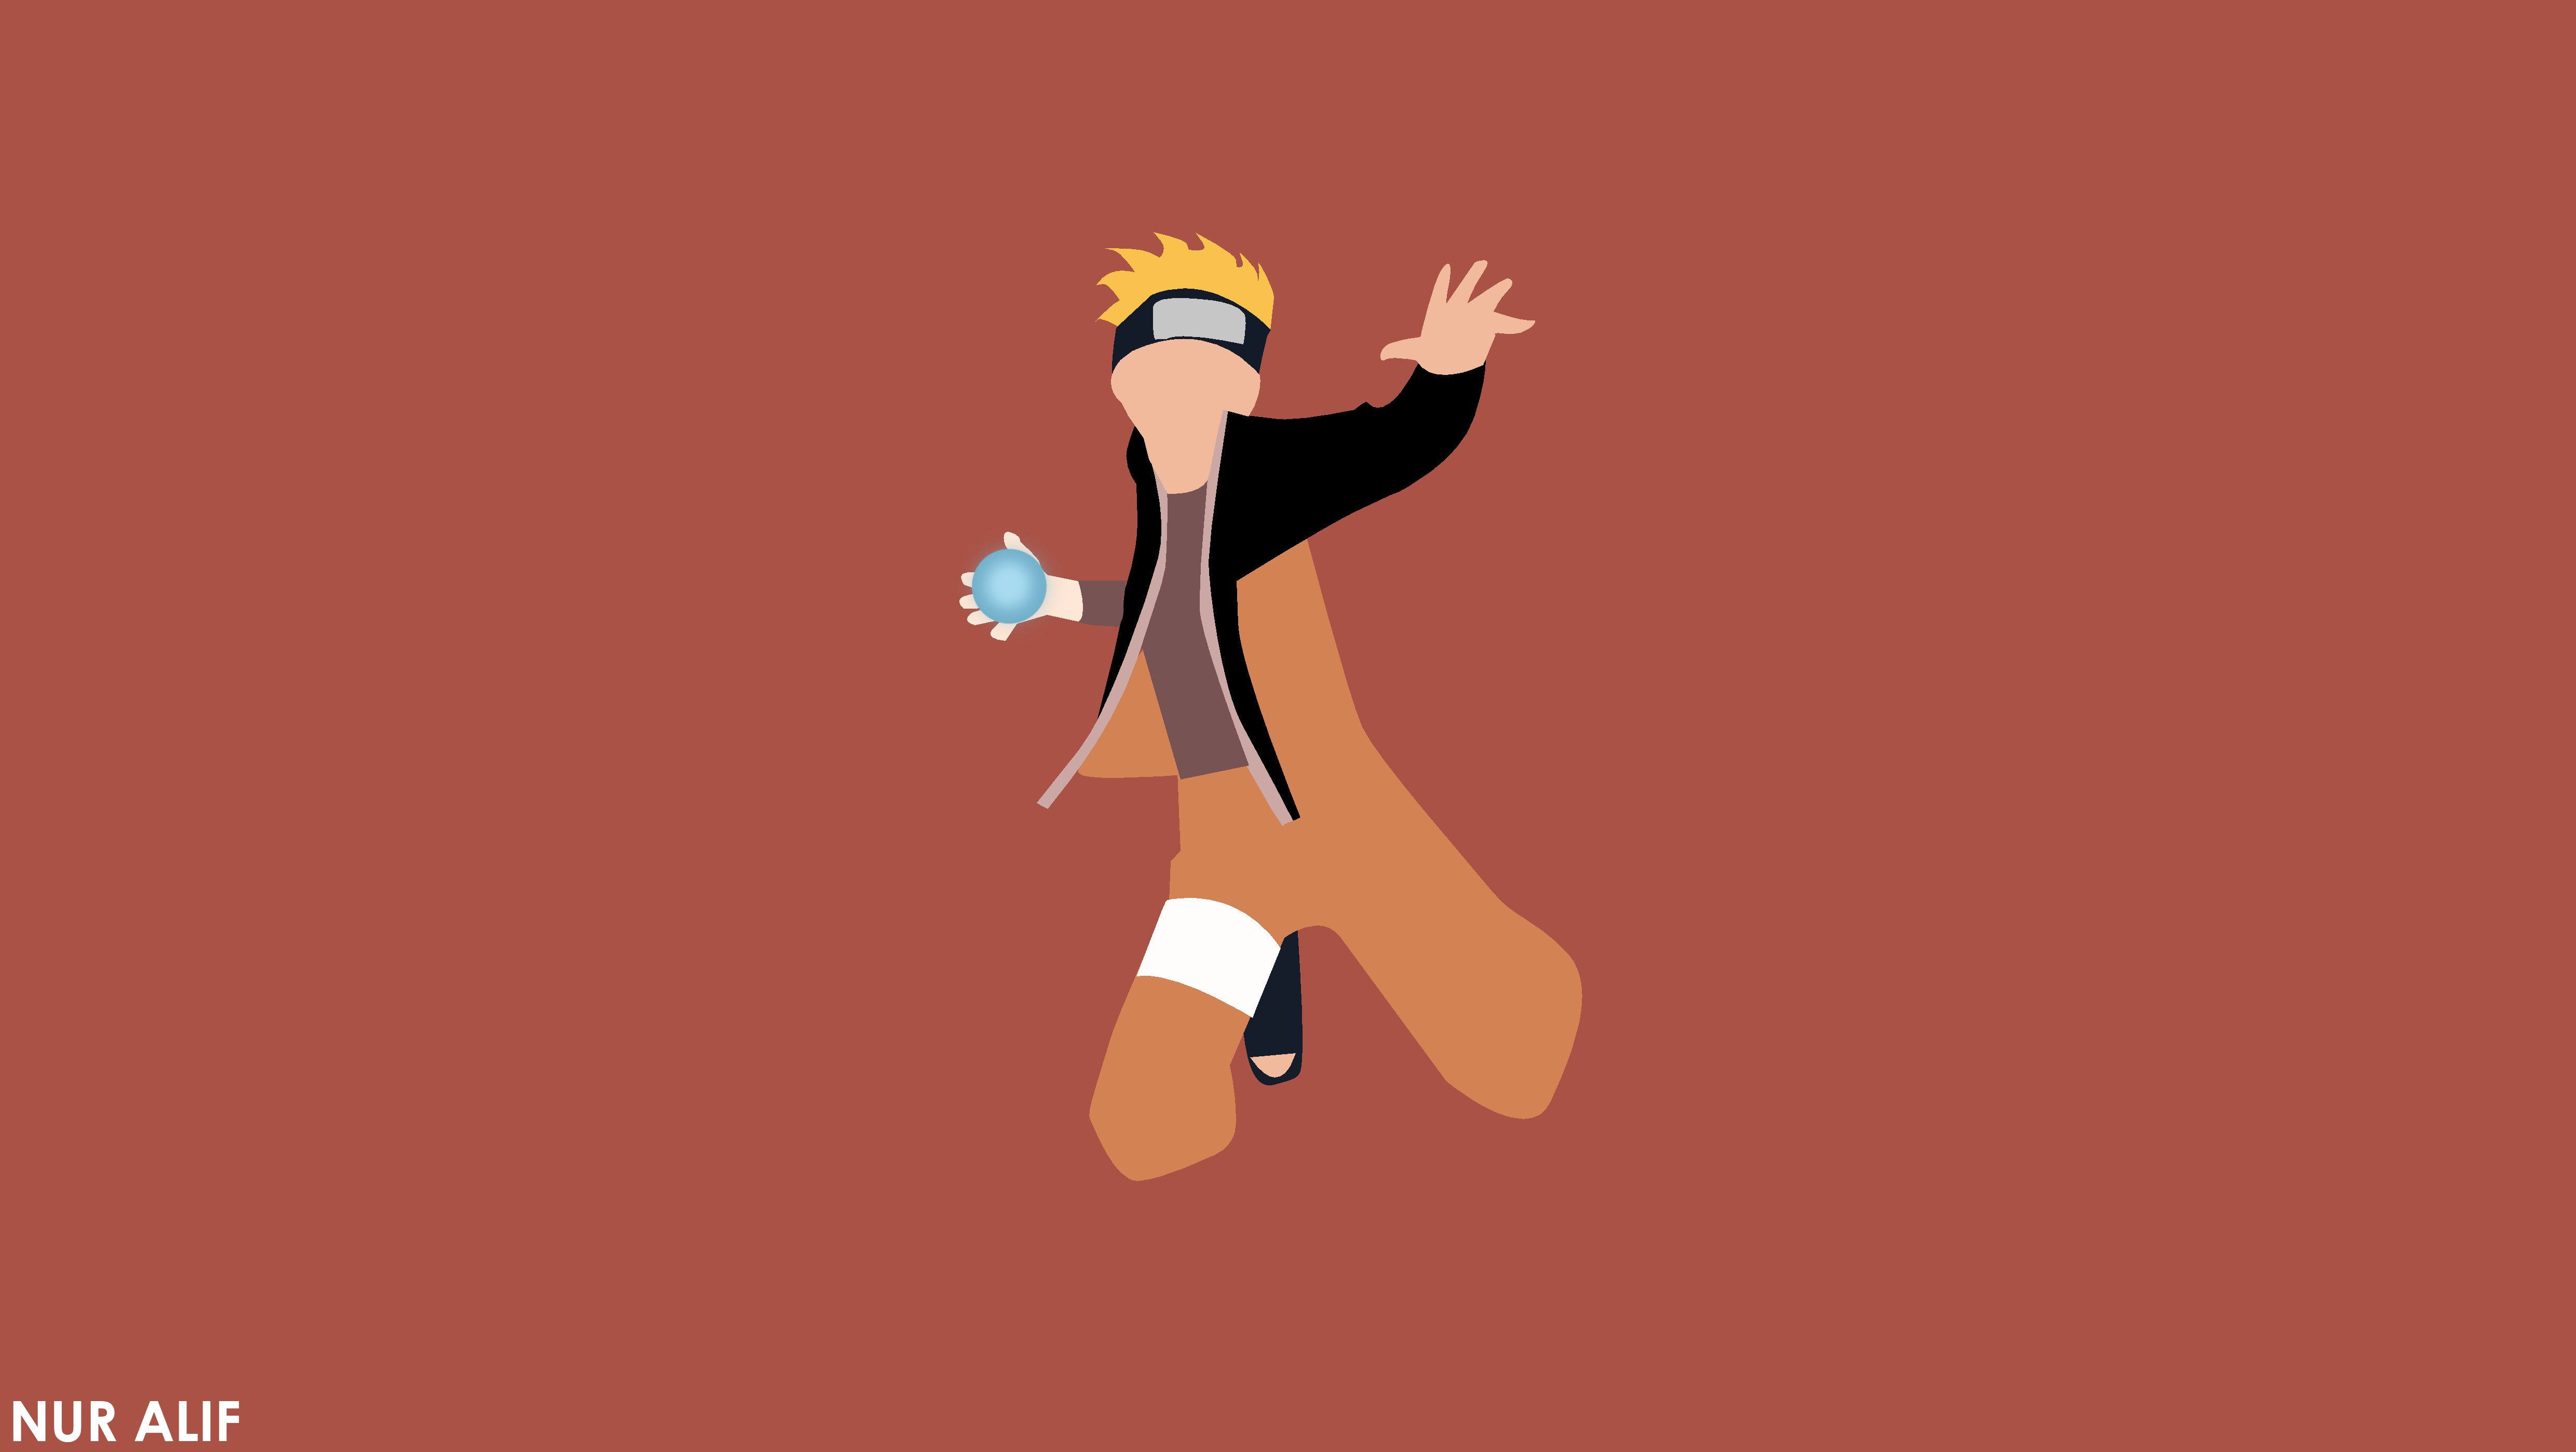 Naruto Uzumaki 4k Wallpaper, HD Anime 4K Wallpaper, Image, Photo and Background